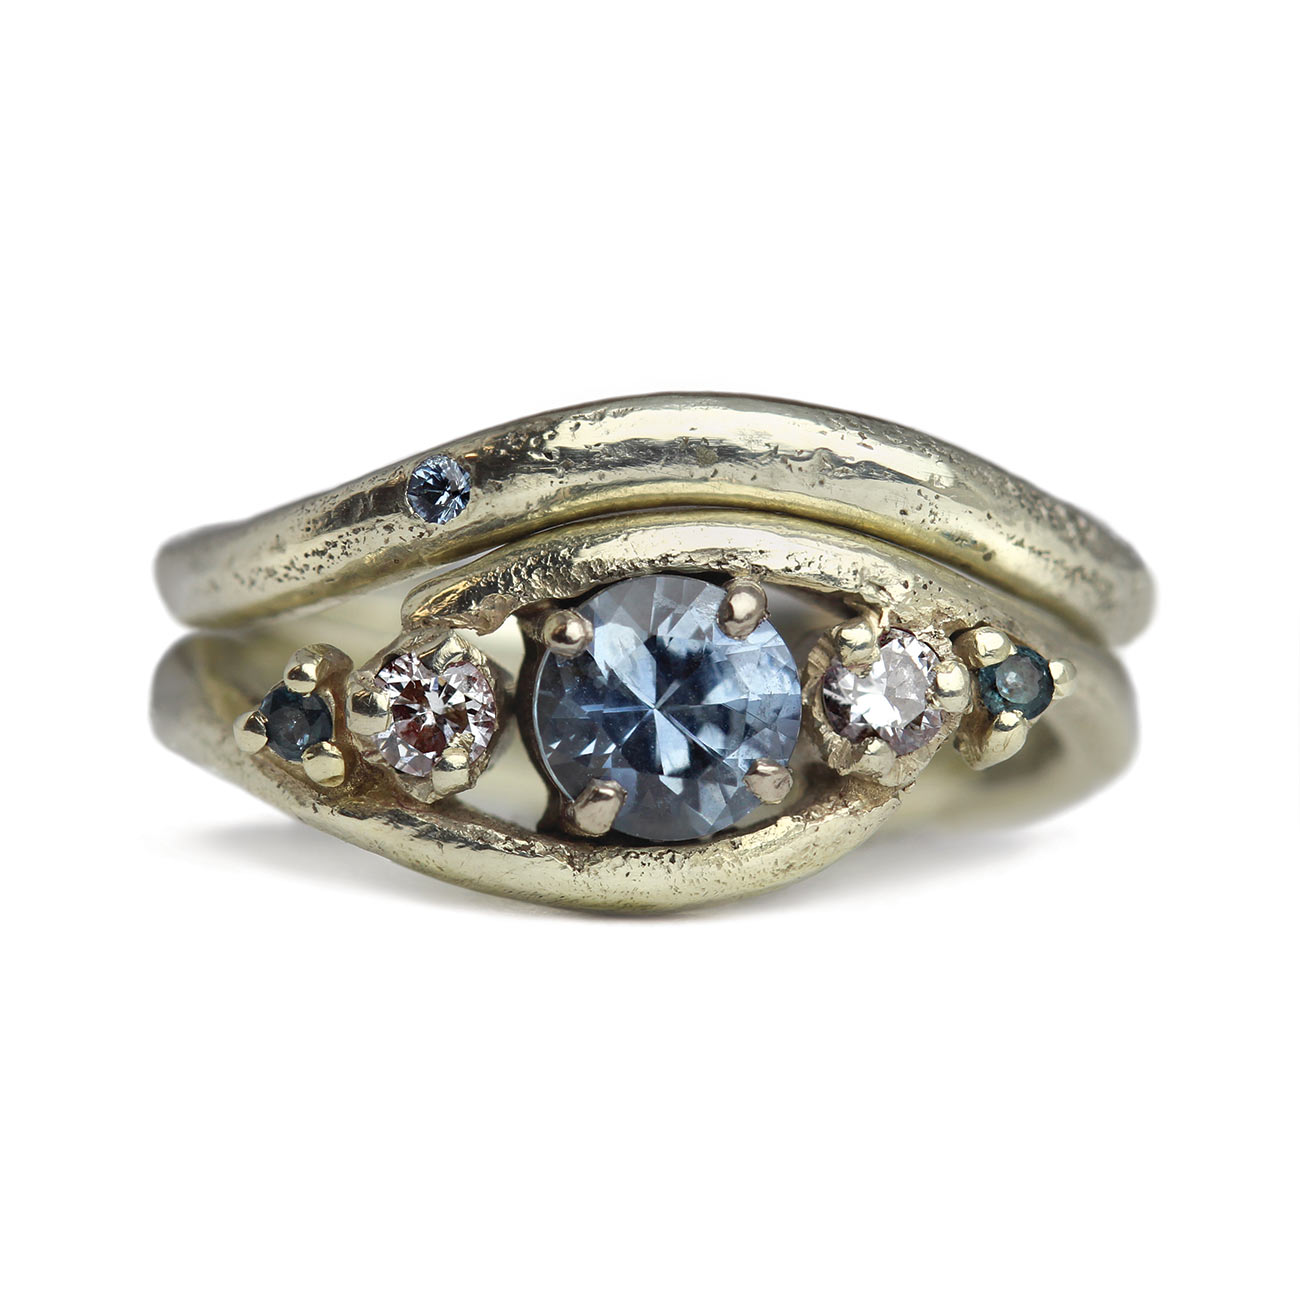 Justin Duance Jewellers Ring Feature Wed Wedding Cornwall Devon Bride4